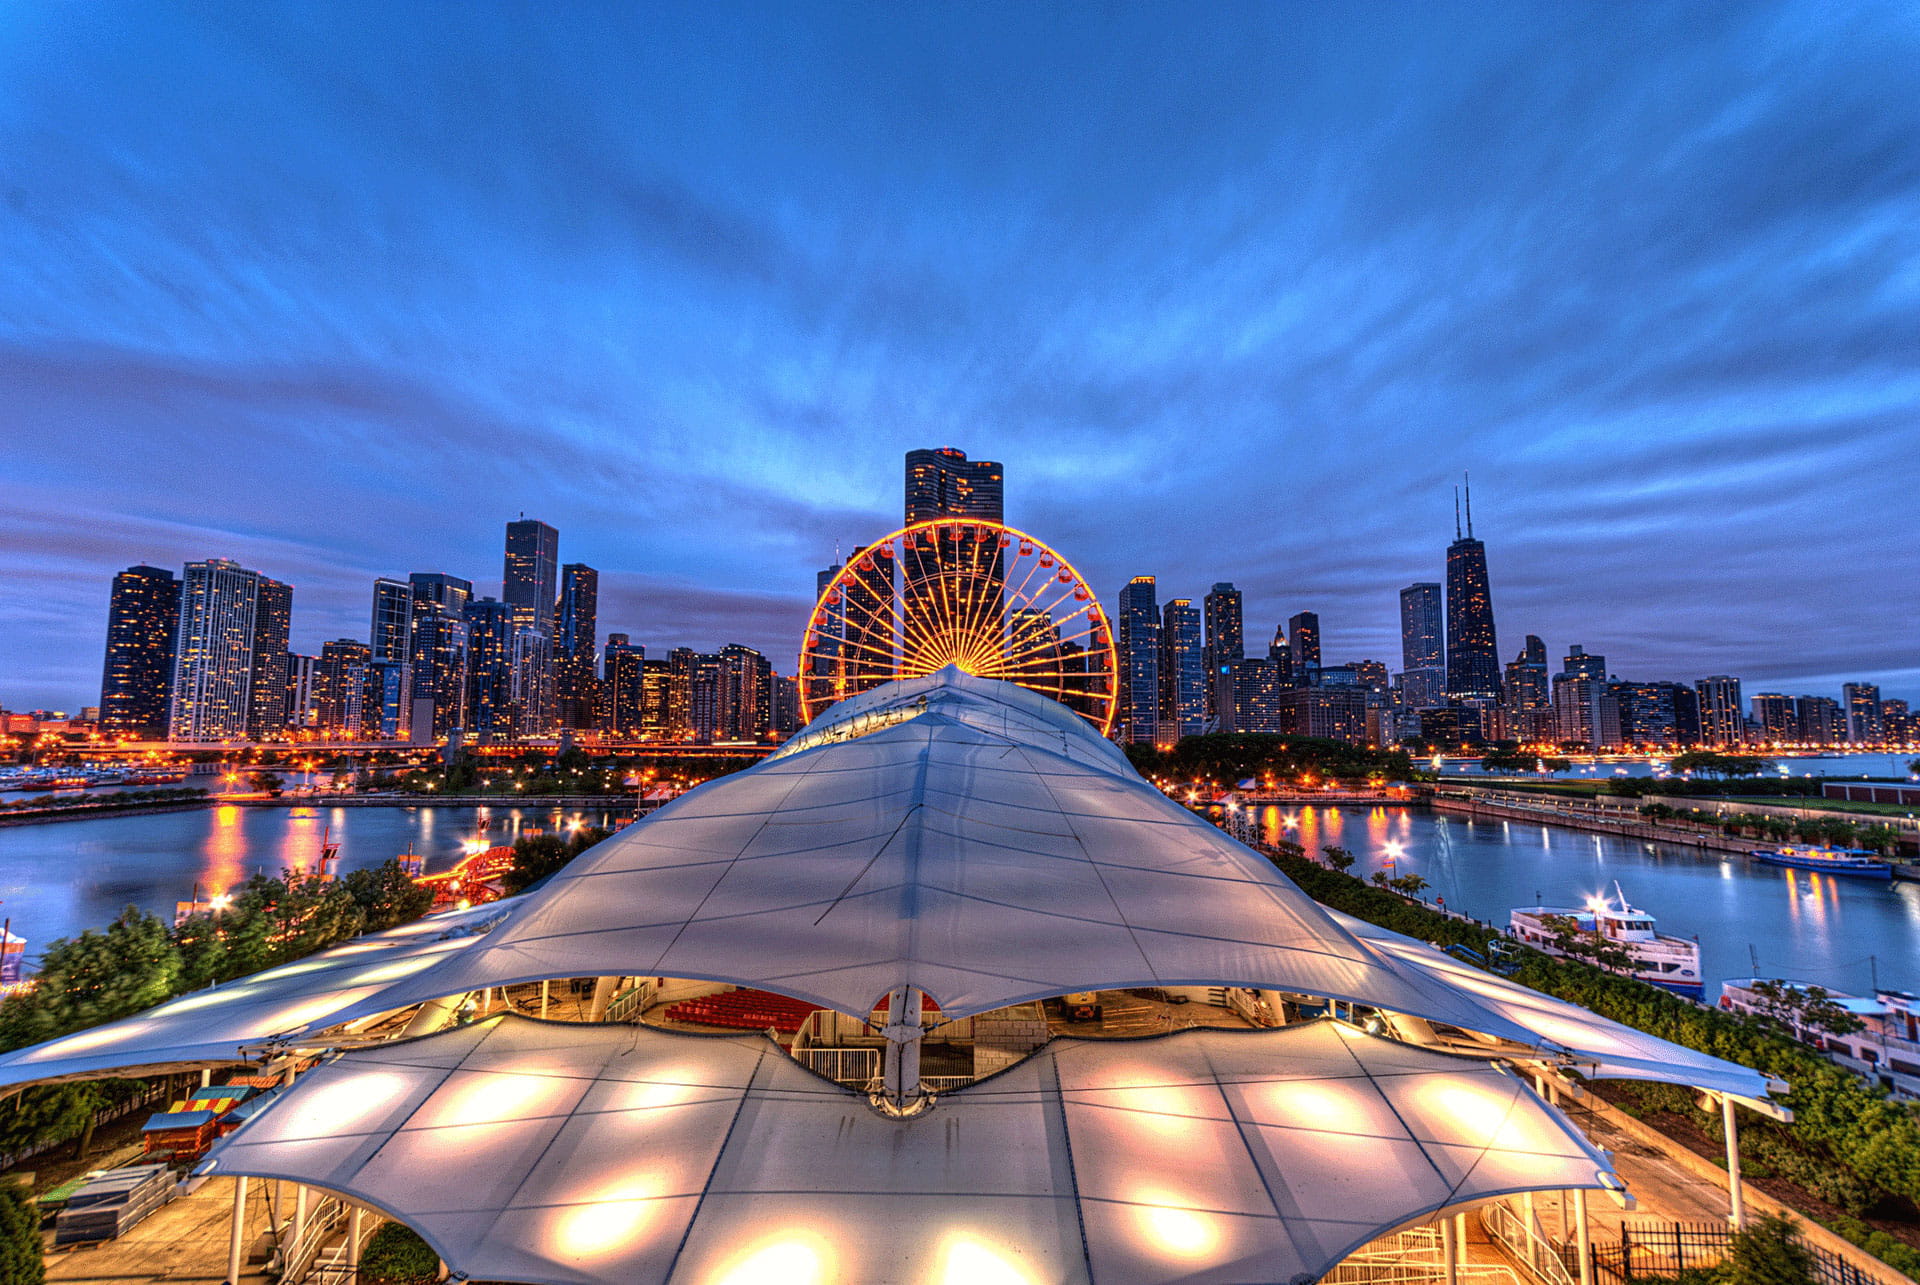 Ferris Wheel and Chicago Skyline at Night